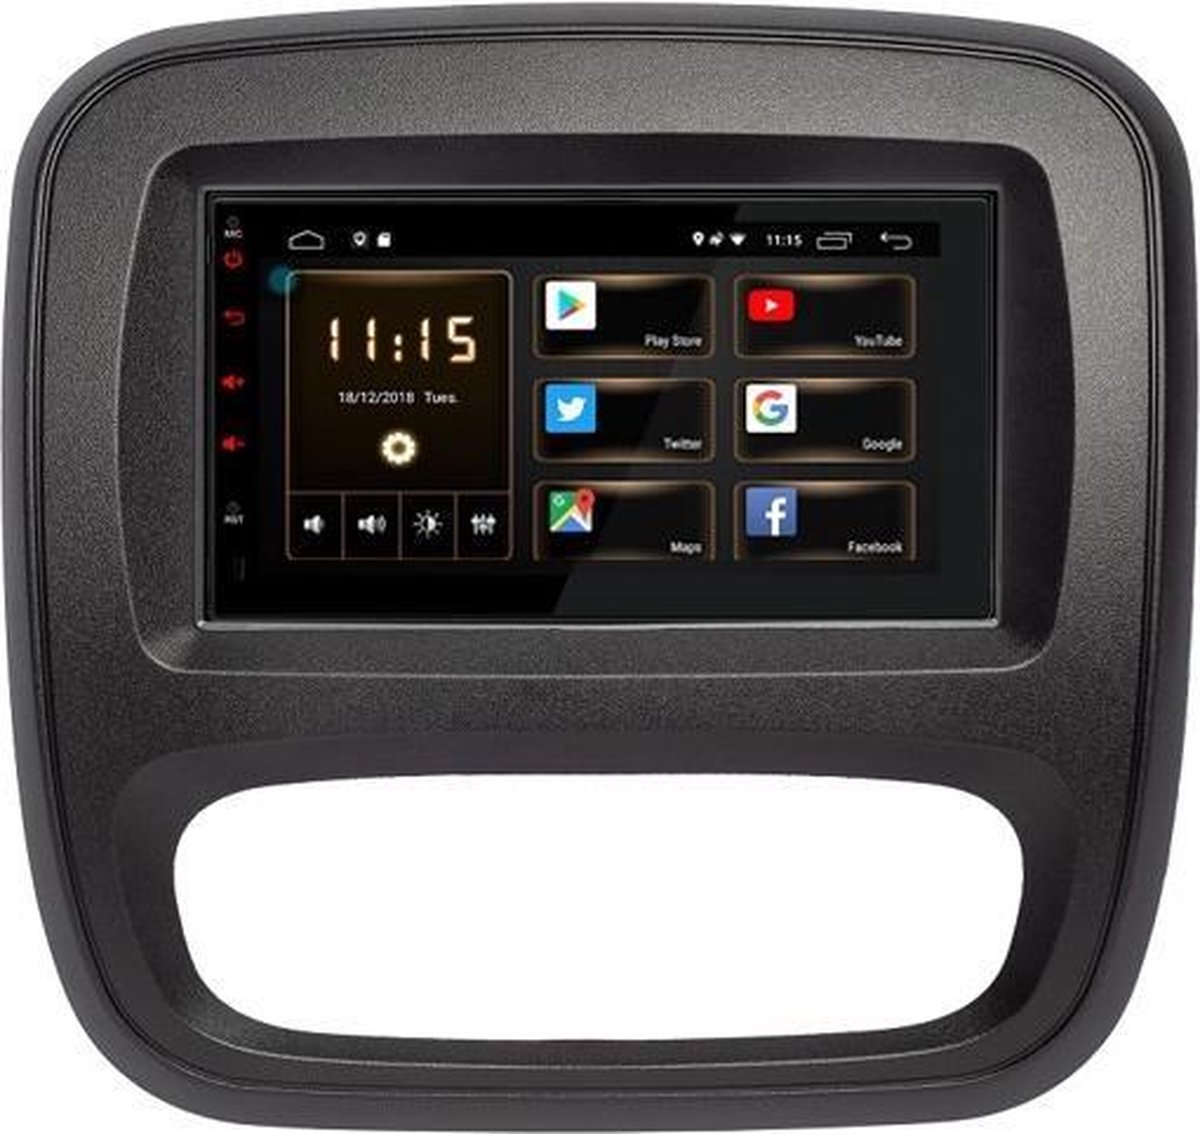 RENAULT Trafic OPEL Vivaro Android 8.1 navigation - Autoradio tactile 7 